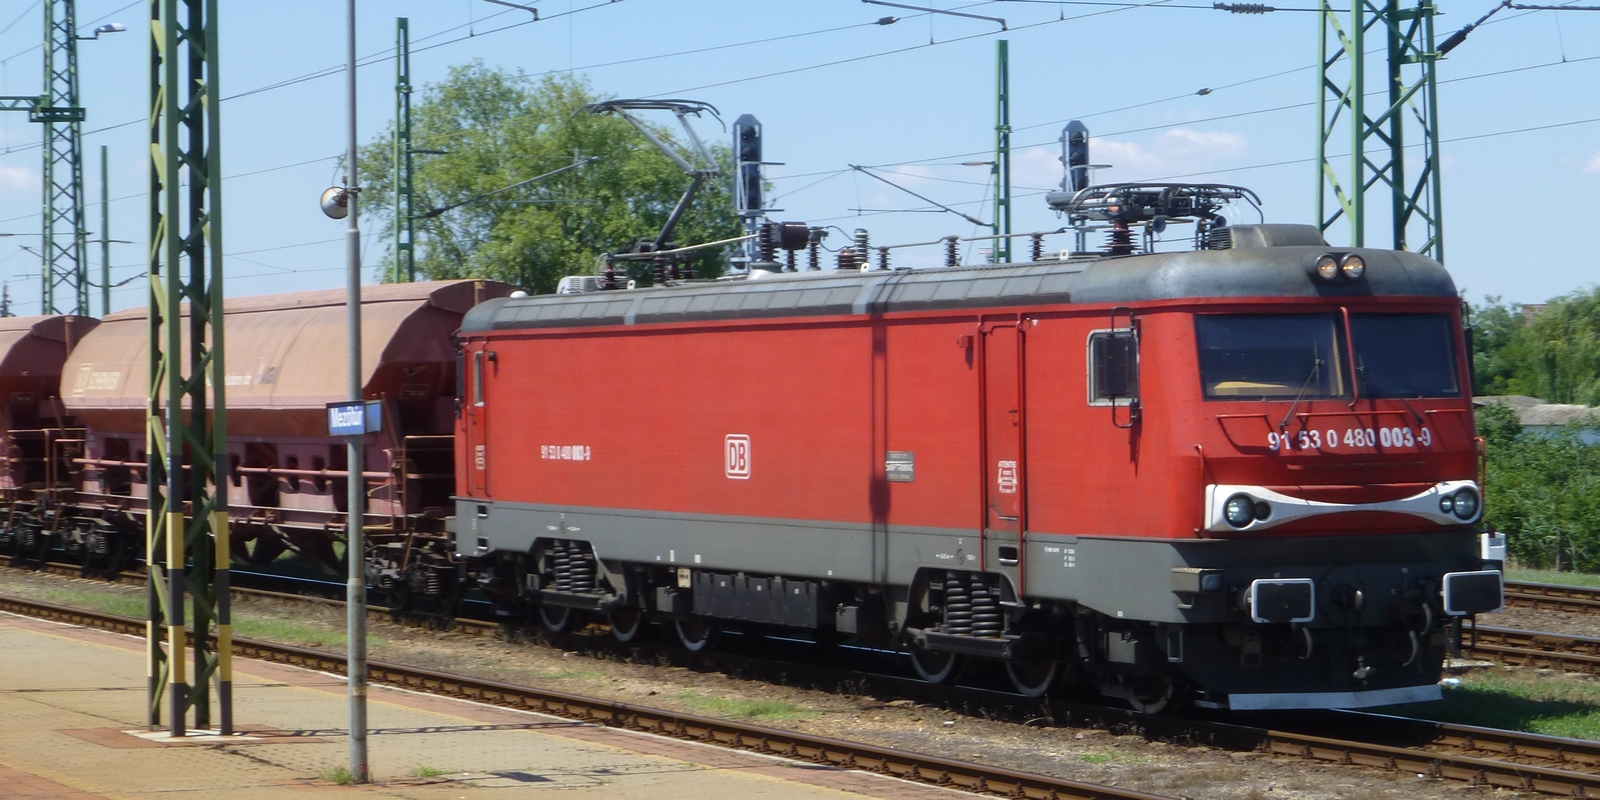 Transmontana with original body design of DB Cargo Romania